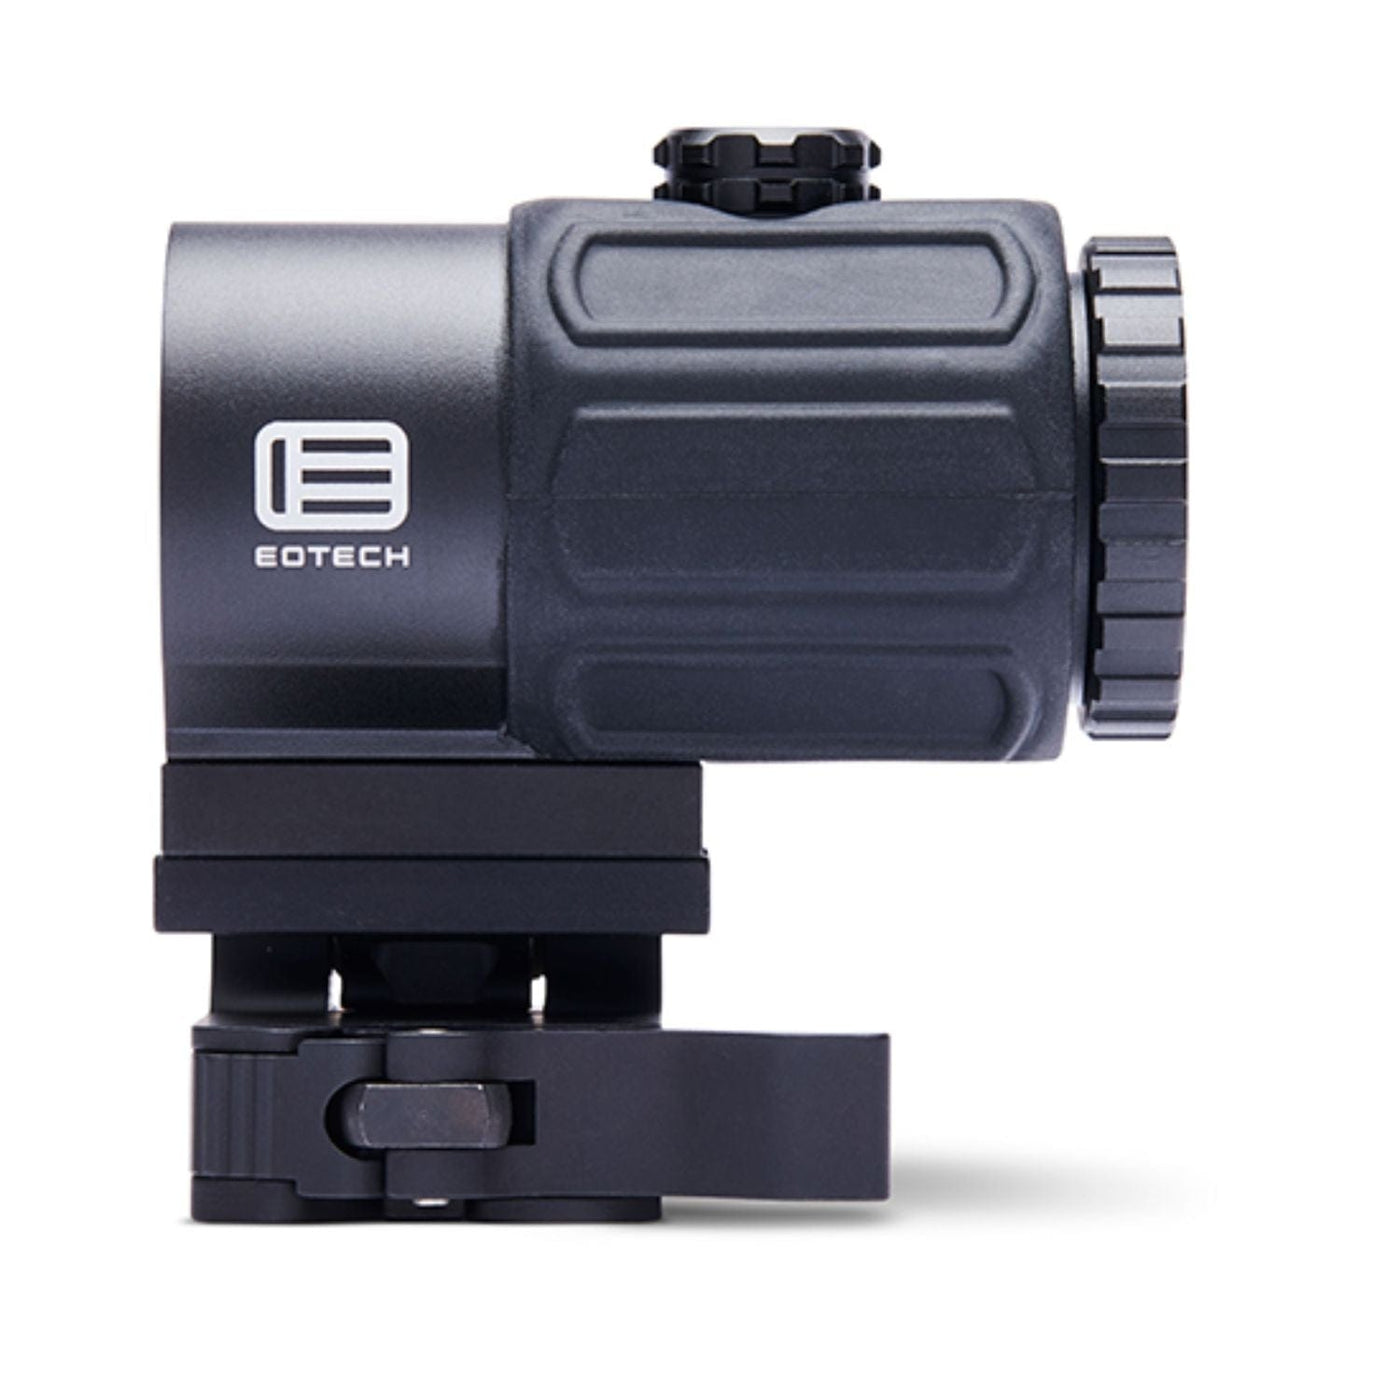 EOTECH EOTECH G43.STS  Magnifier Optics And Sights